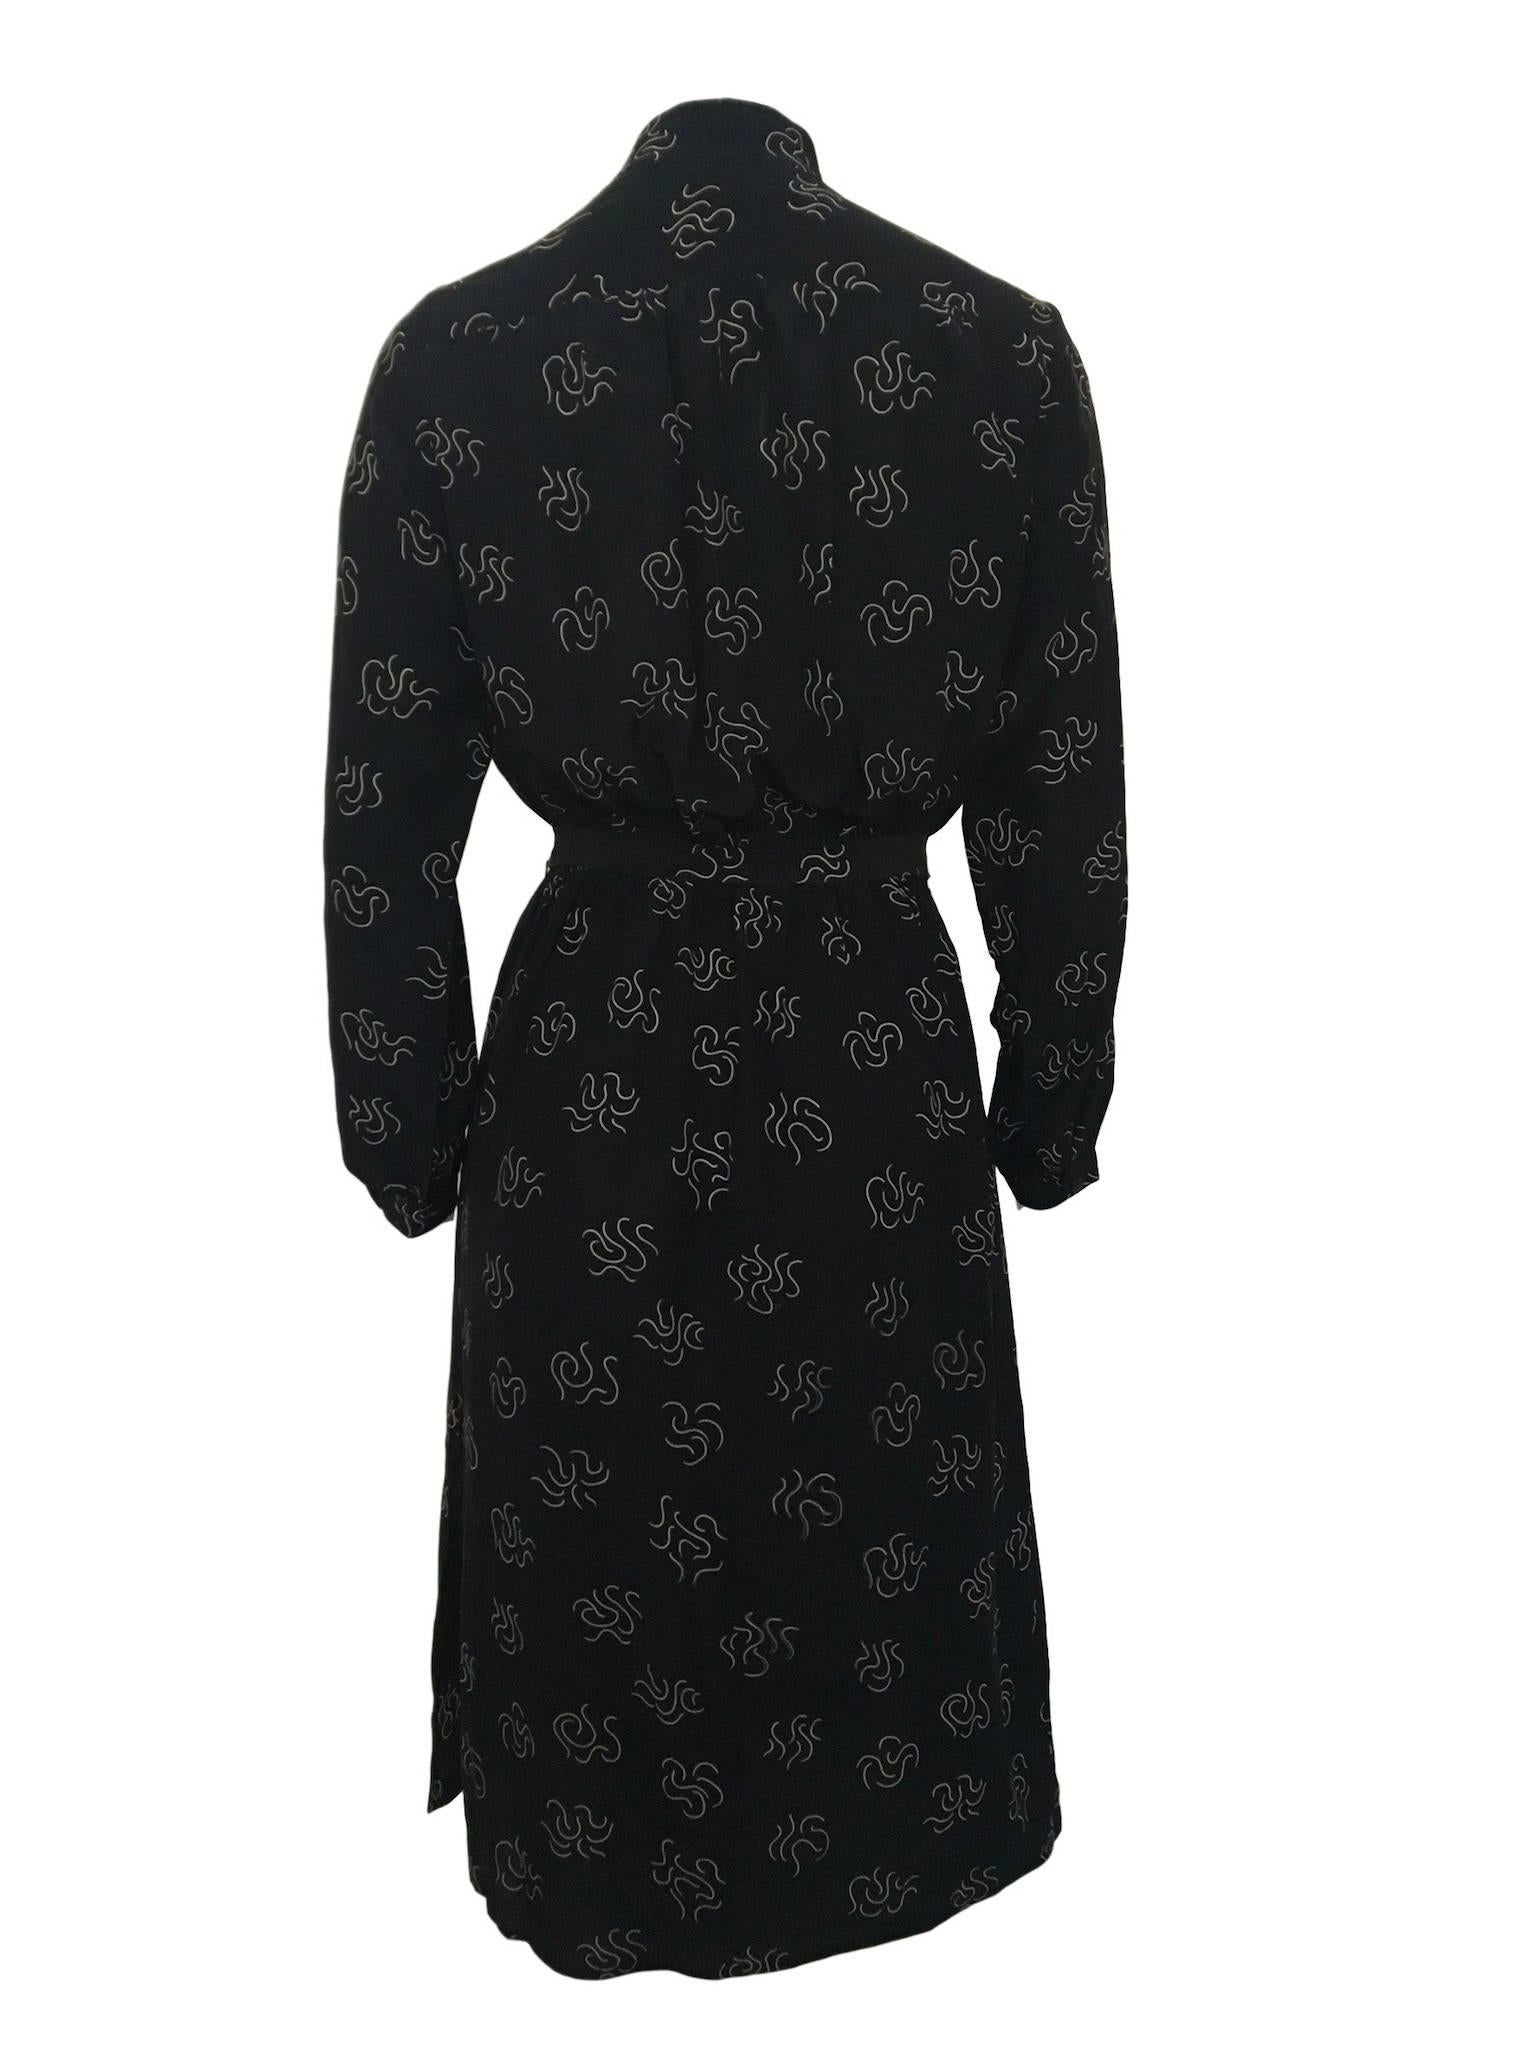 Diane Von Furstenberg original 70s silk black white printed shirt dress. With mandarin collar and button front fastening, has original belt.

Excellent condition

Size 10 UK Measures 